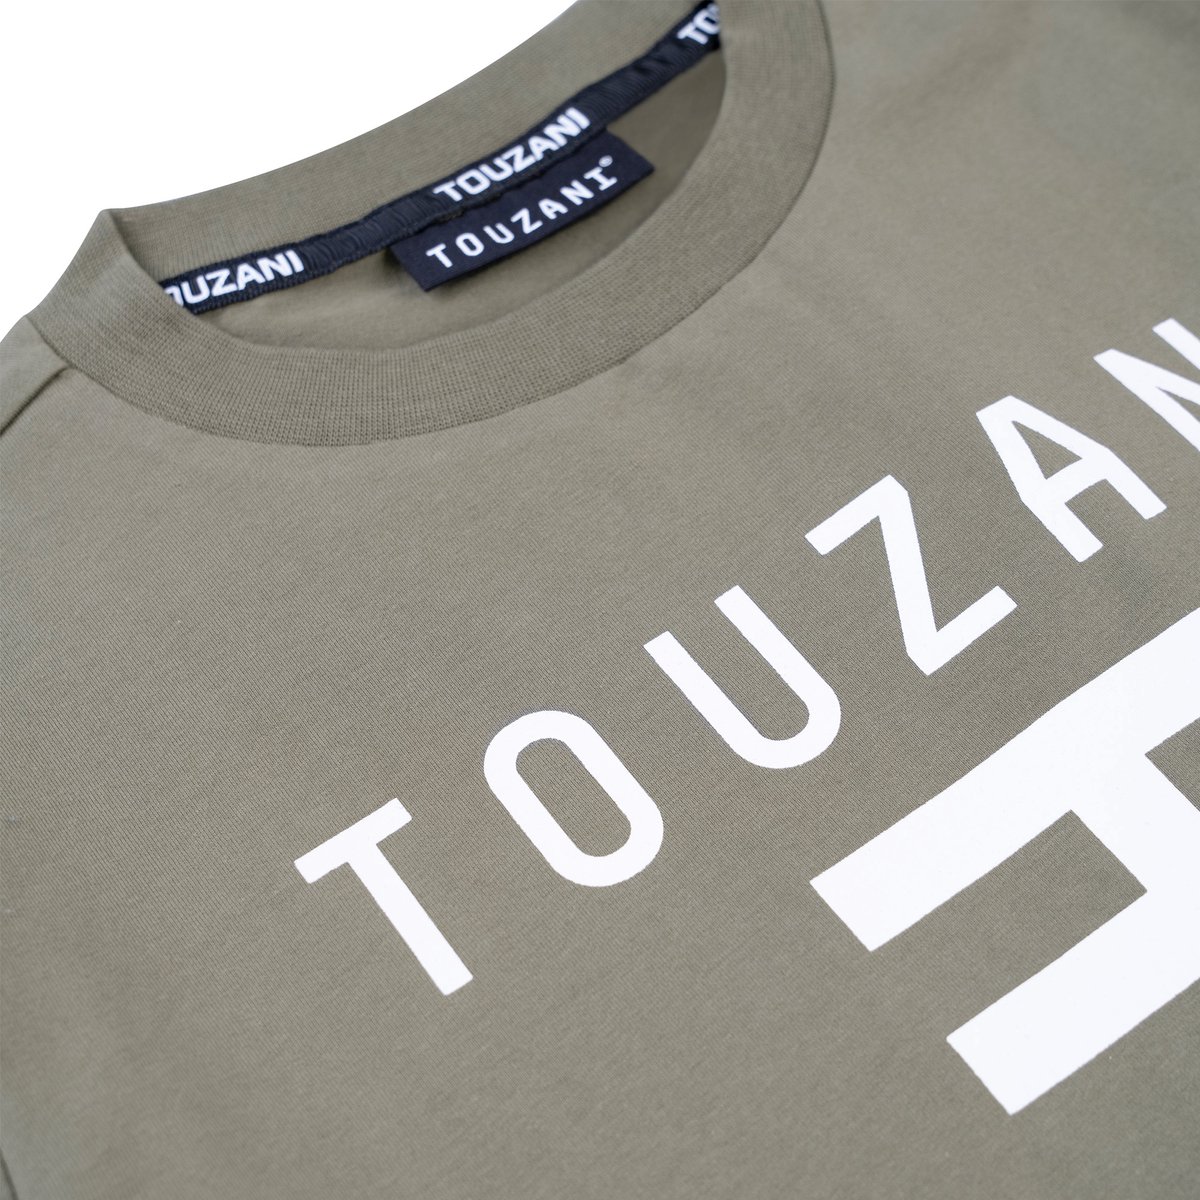 Touzani - T-shirt - KUJAKU STREET ARMY (146-152) - Kind - Voetbalshirt - Sportshirt